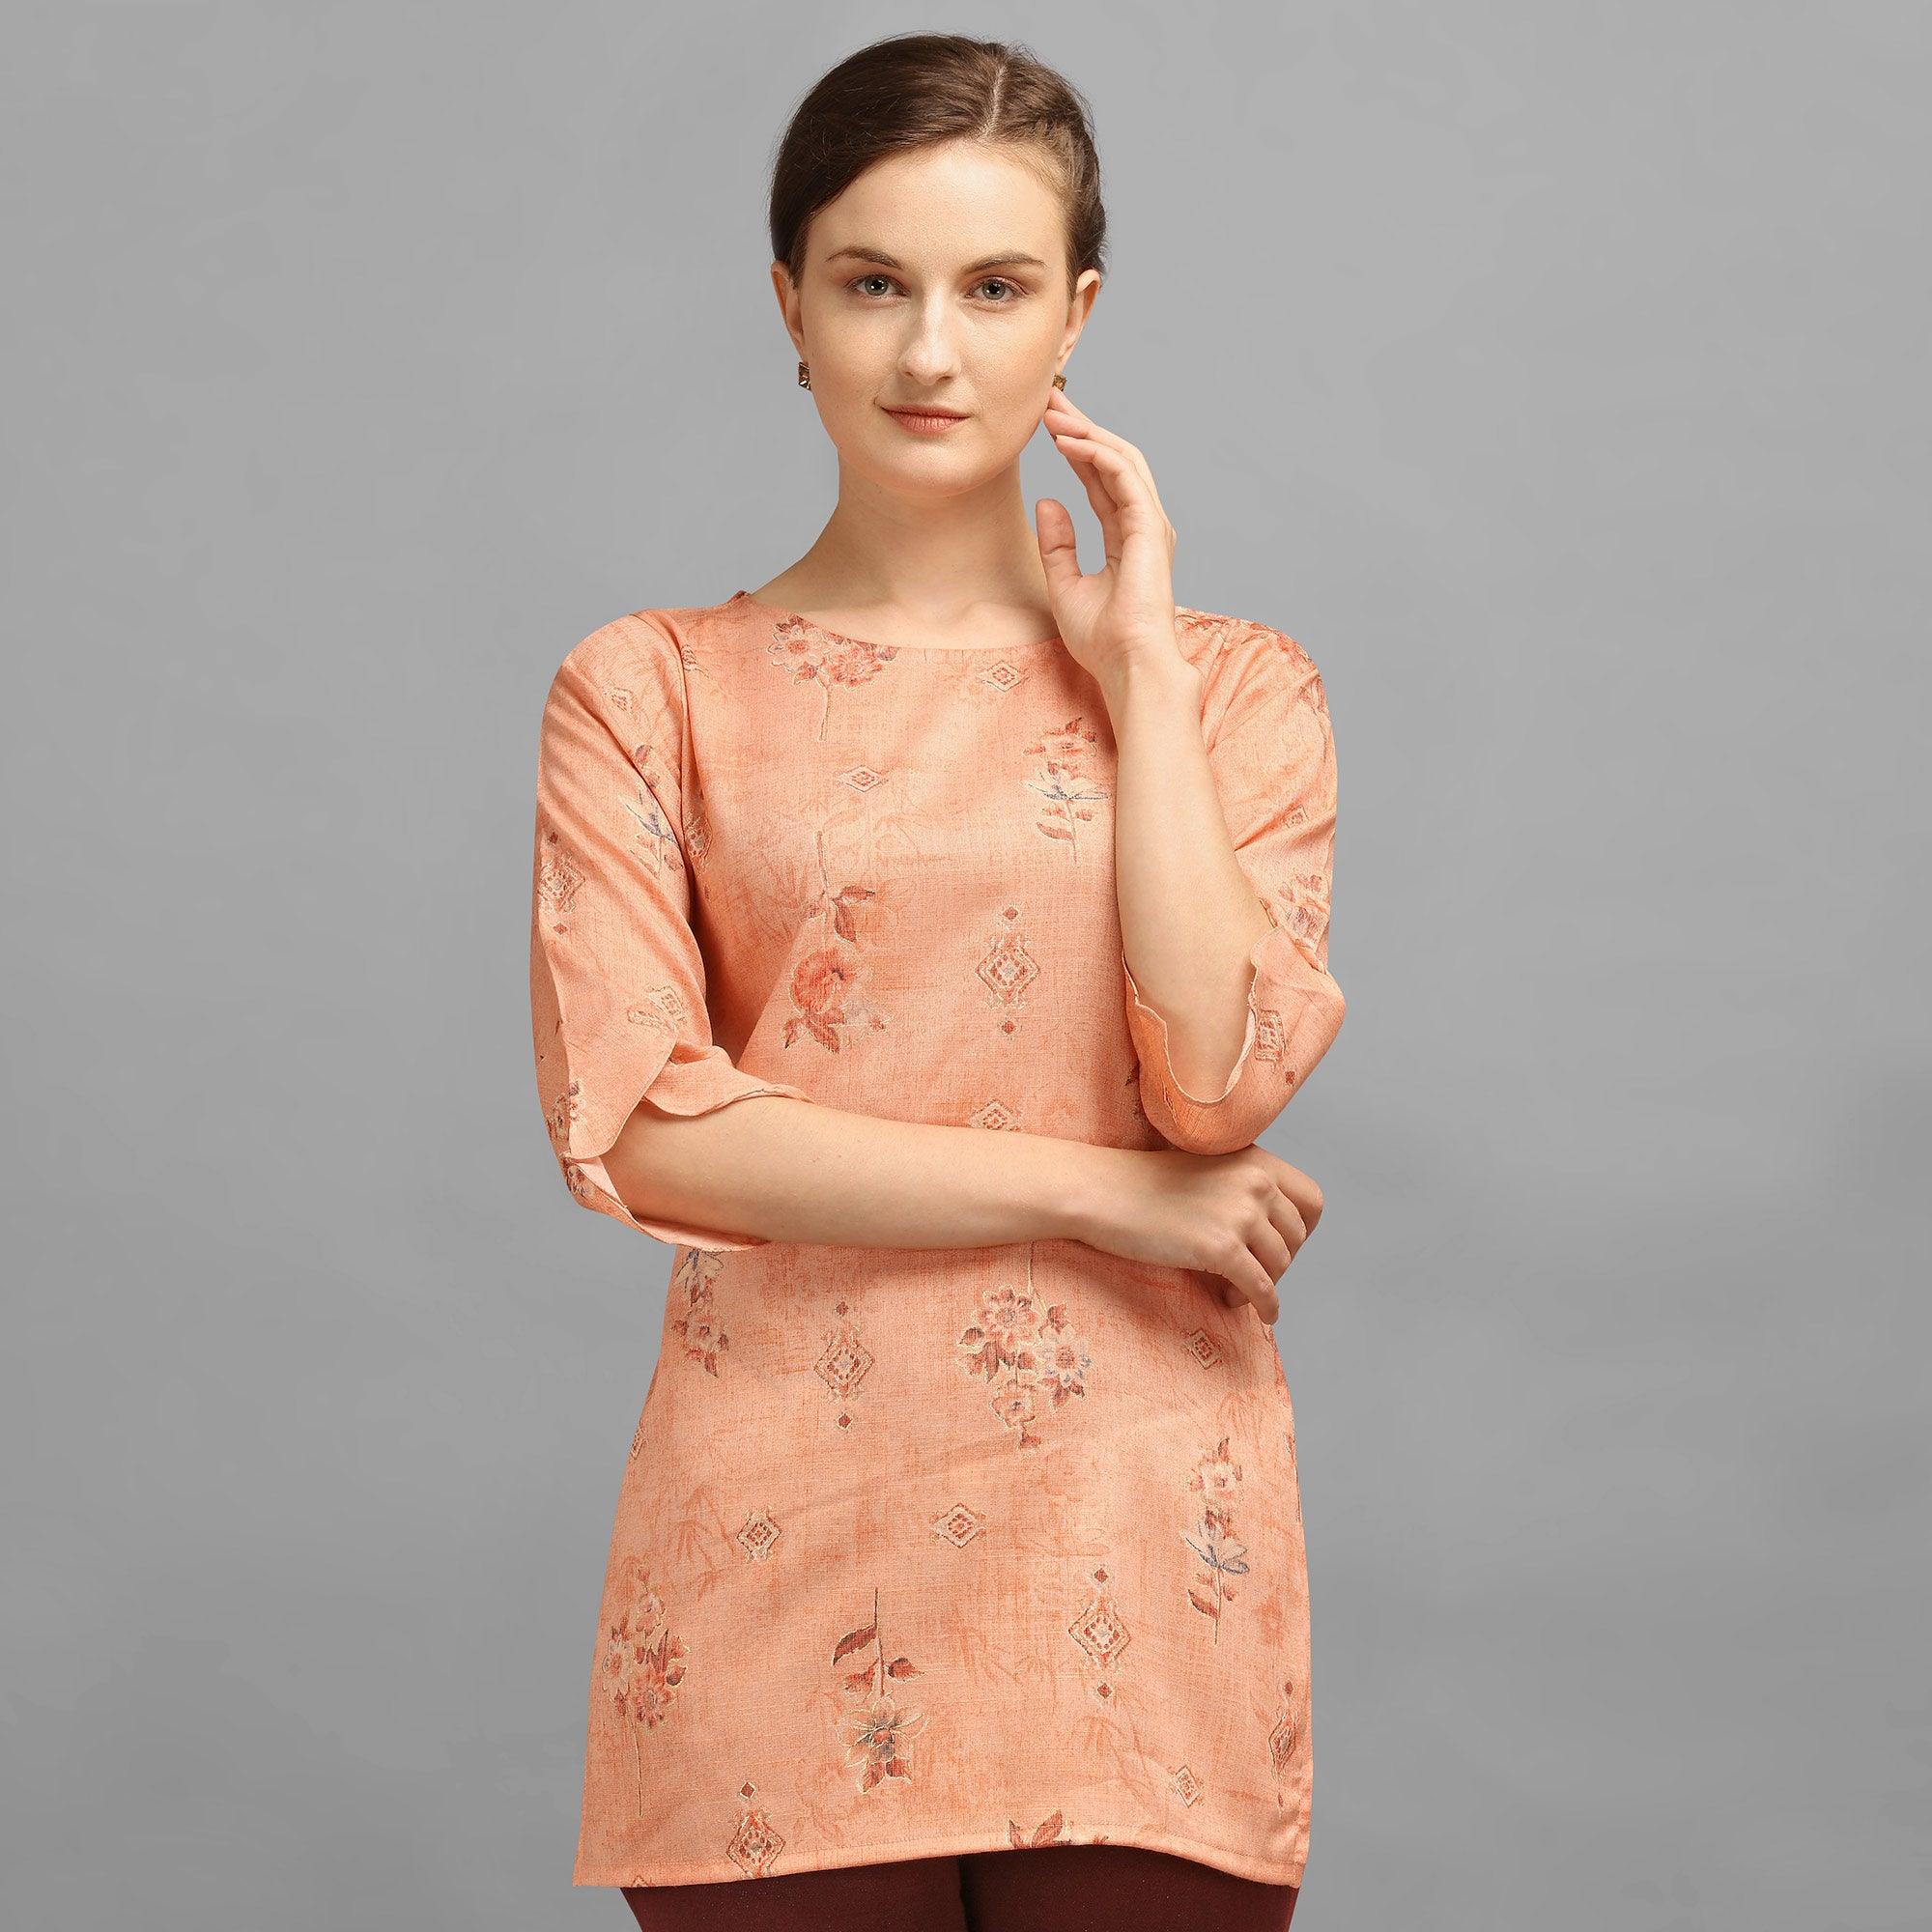 Alluring Peach Colored Casual Wear Foil Printed Rayon Top - Peachmode